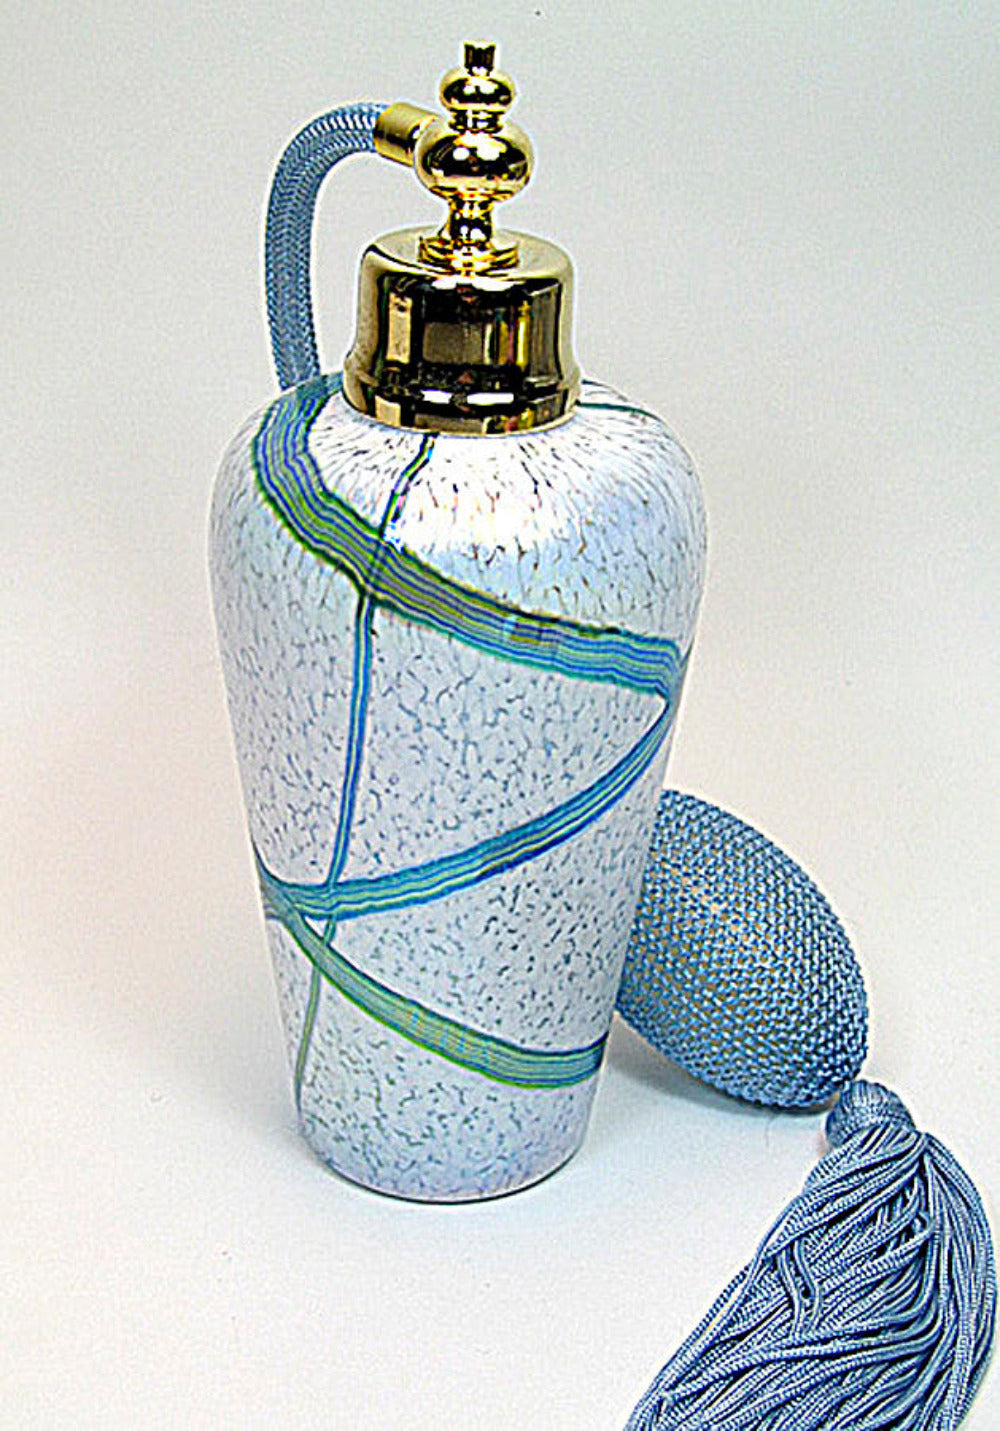 Art perfume bottle witjh sprayer